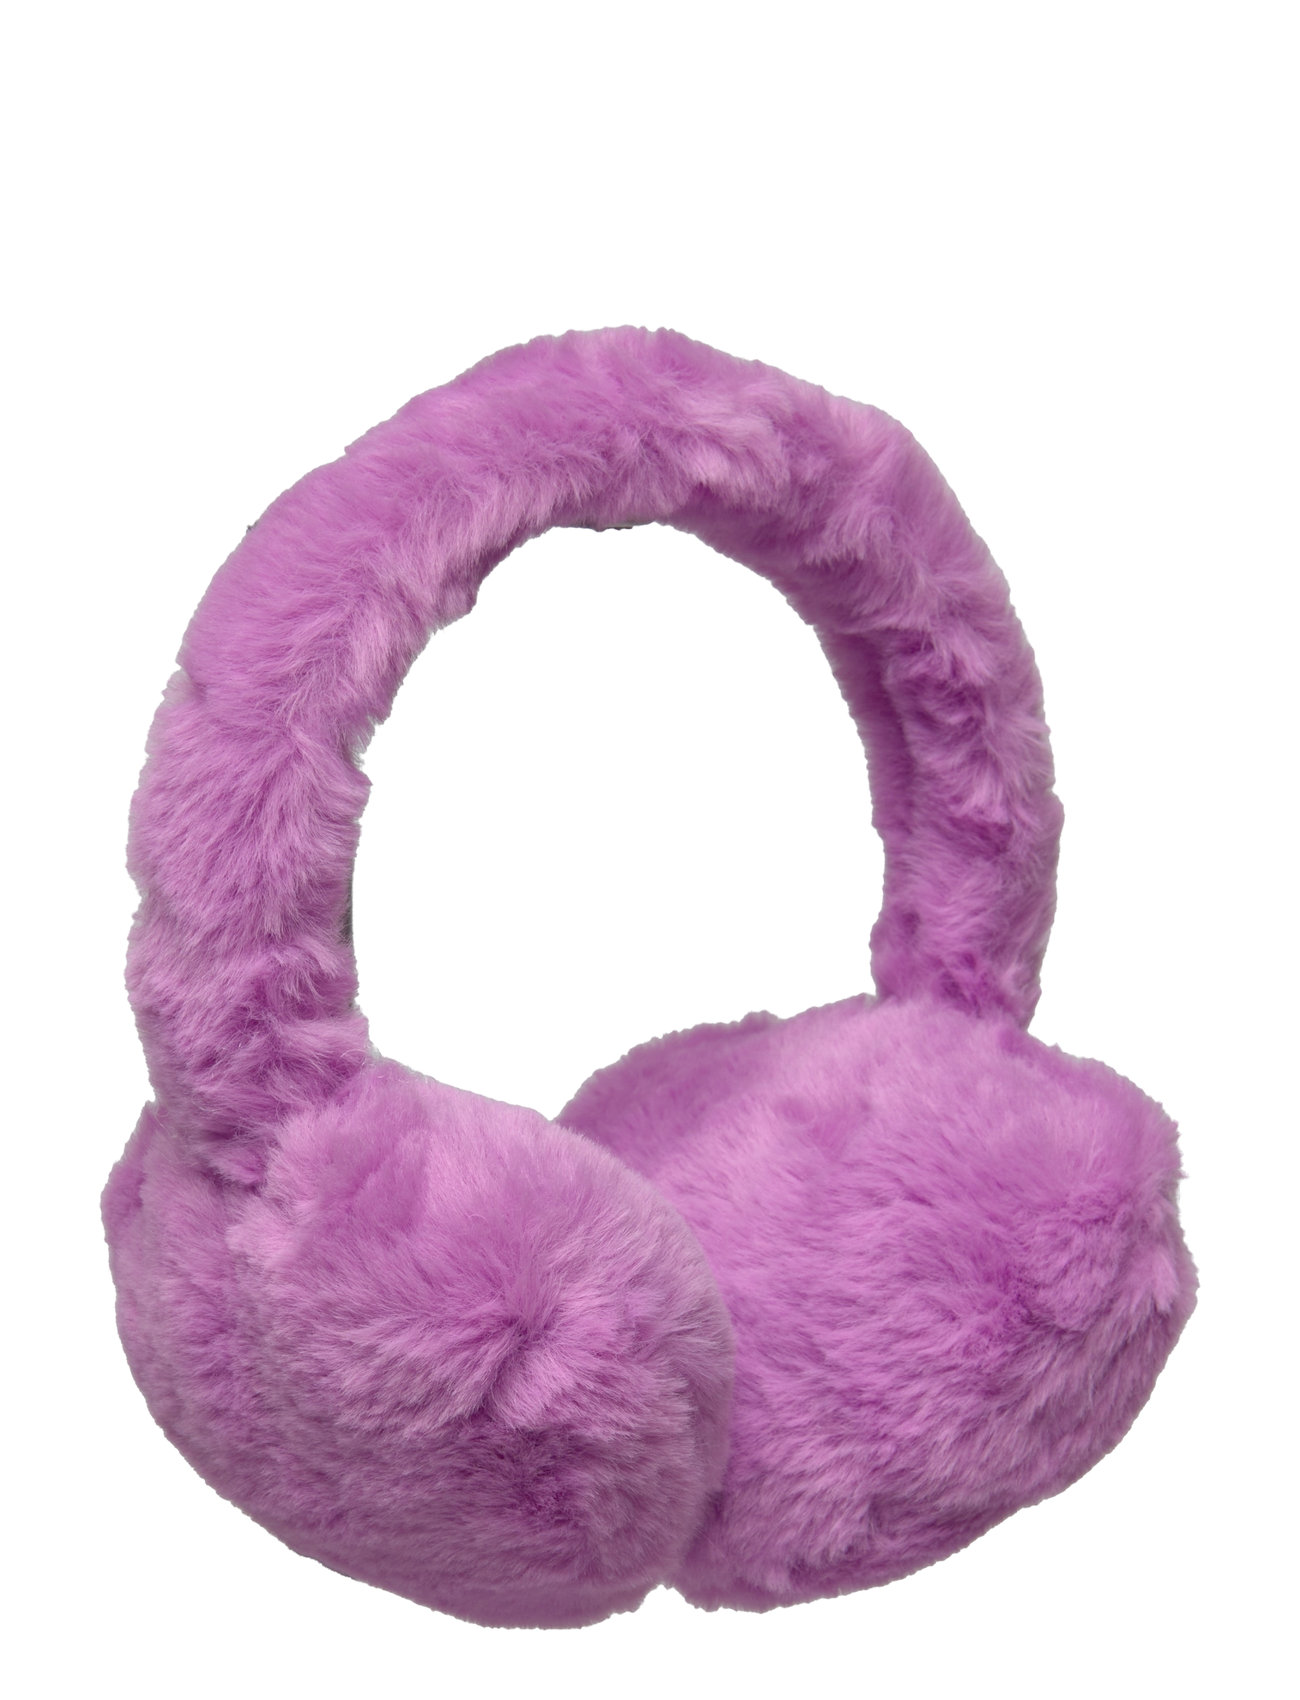 Earmuffs Fur Heart Accessories Headwear Hats Earmuffs Pink Lindex